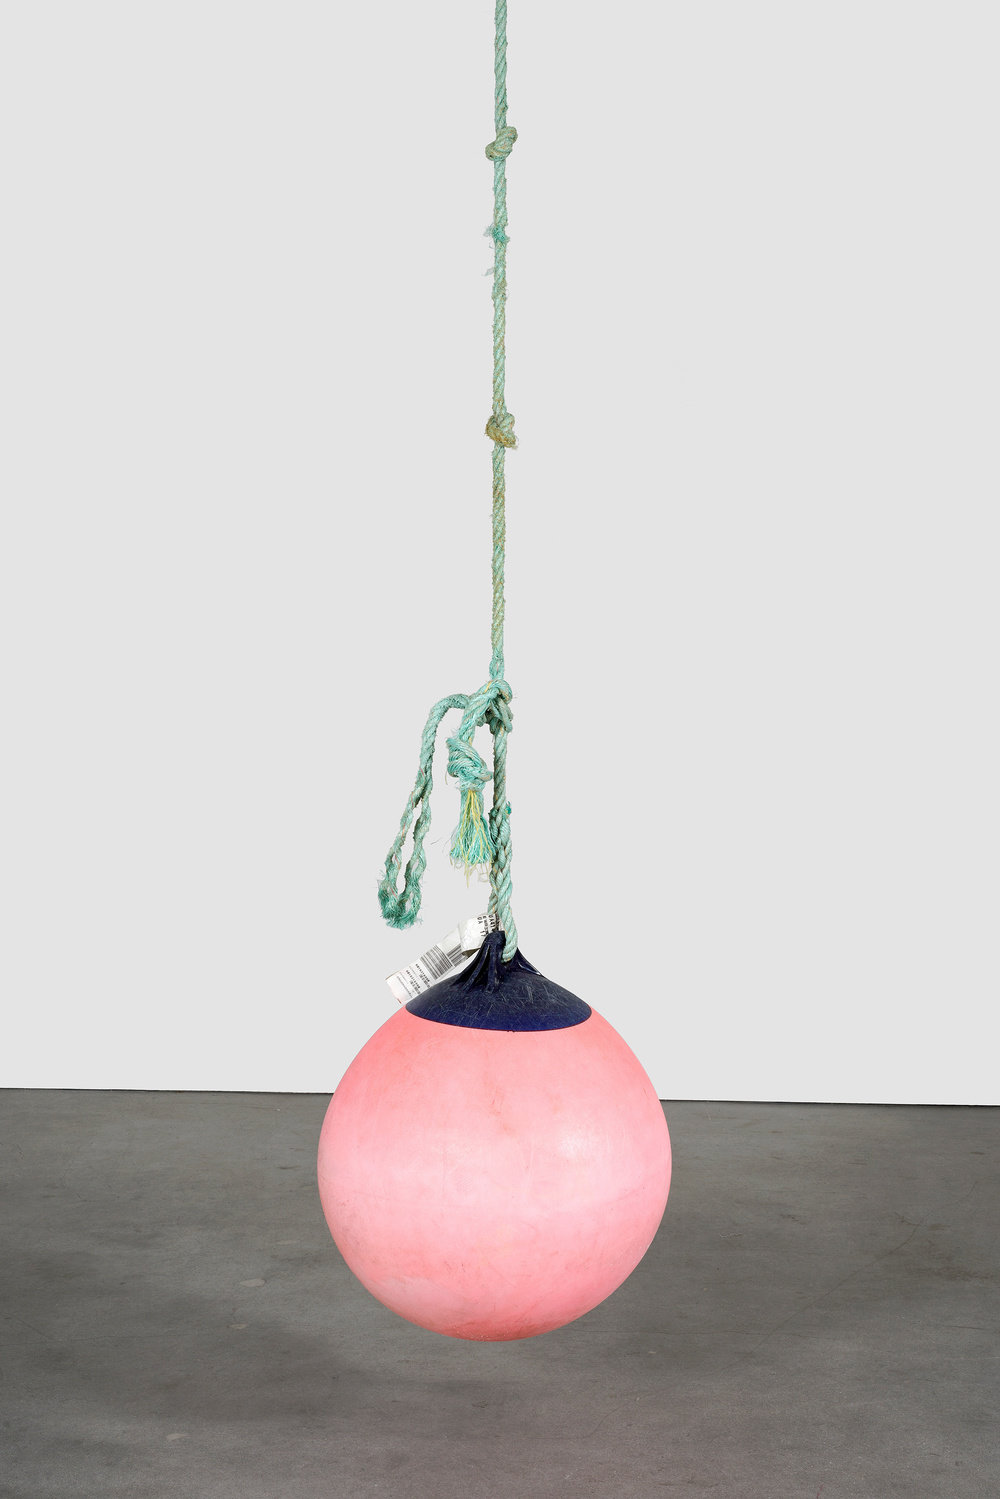 Riepenhoff, swing by tobias madison and kaspar müller, 2013, buoy, 24 x 24 x 26 in. 60.96 x 60.96 x 66.04 cm cnon 57.396